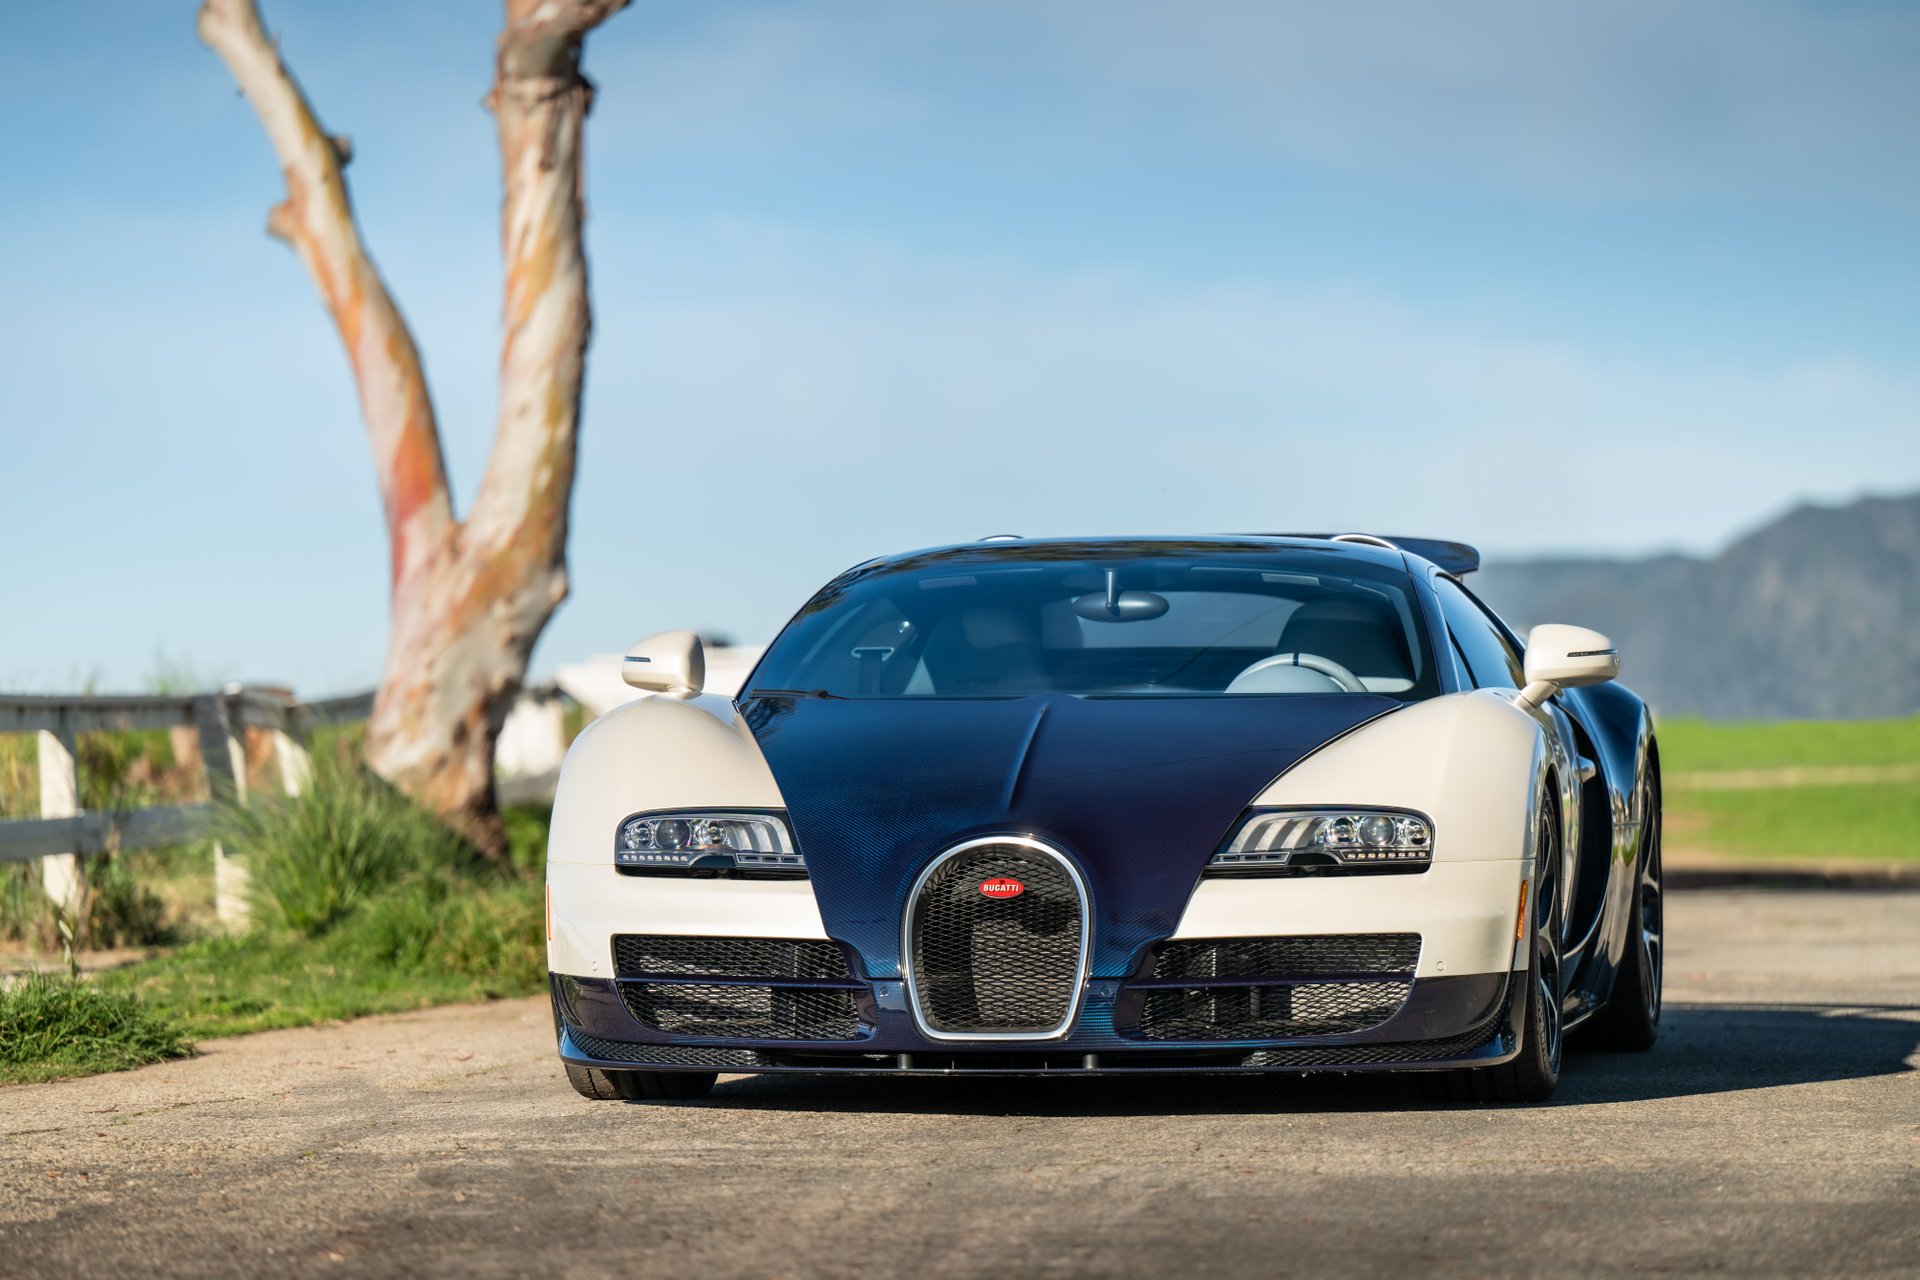 For Sale 2015 Bugatti Veyron Grand Sport Vitesse